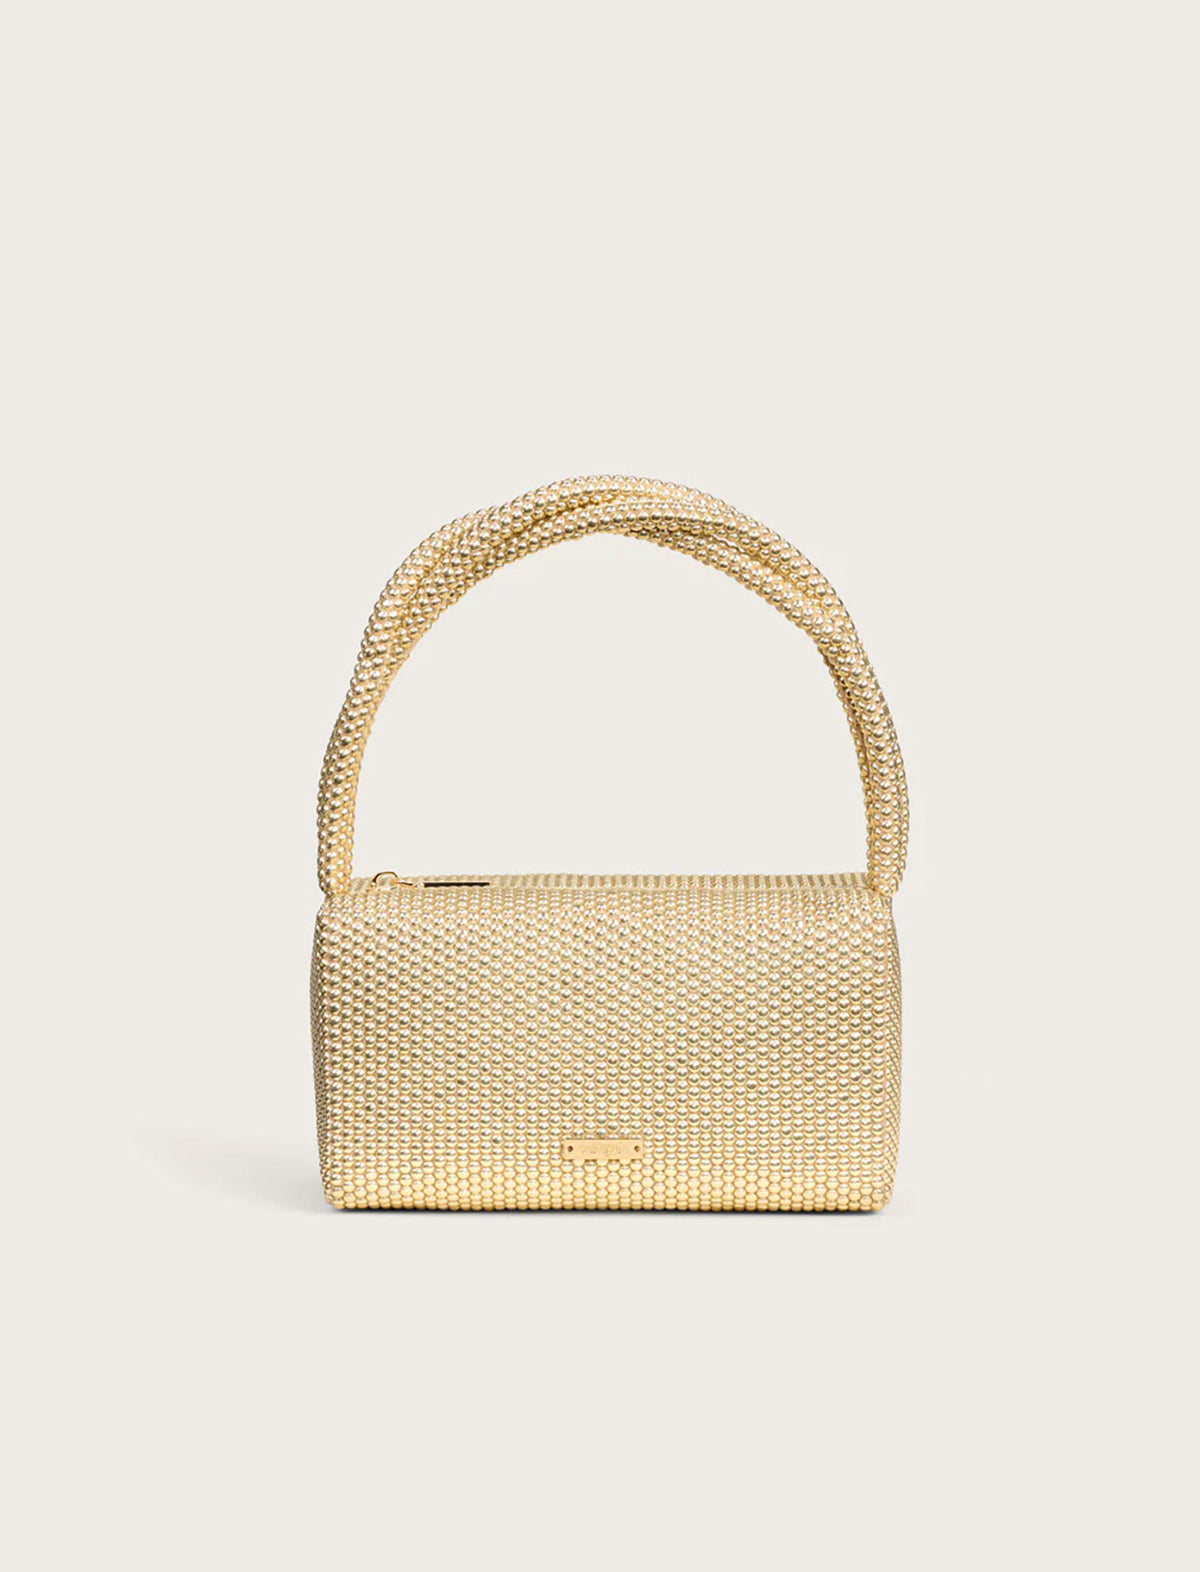 CULT GAIA Sienna Mini Top Handle Bag in Shiny Brass